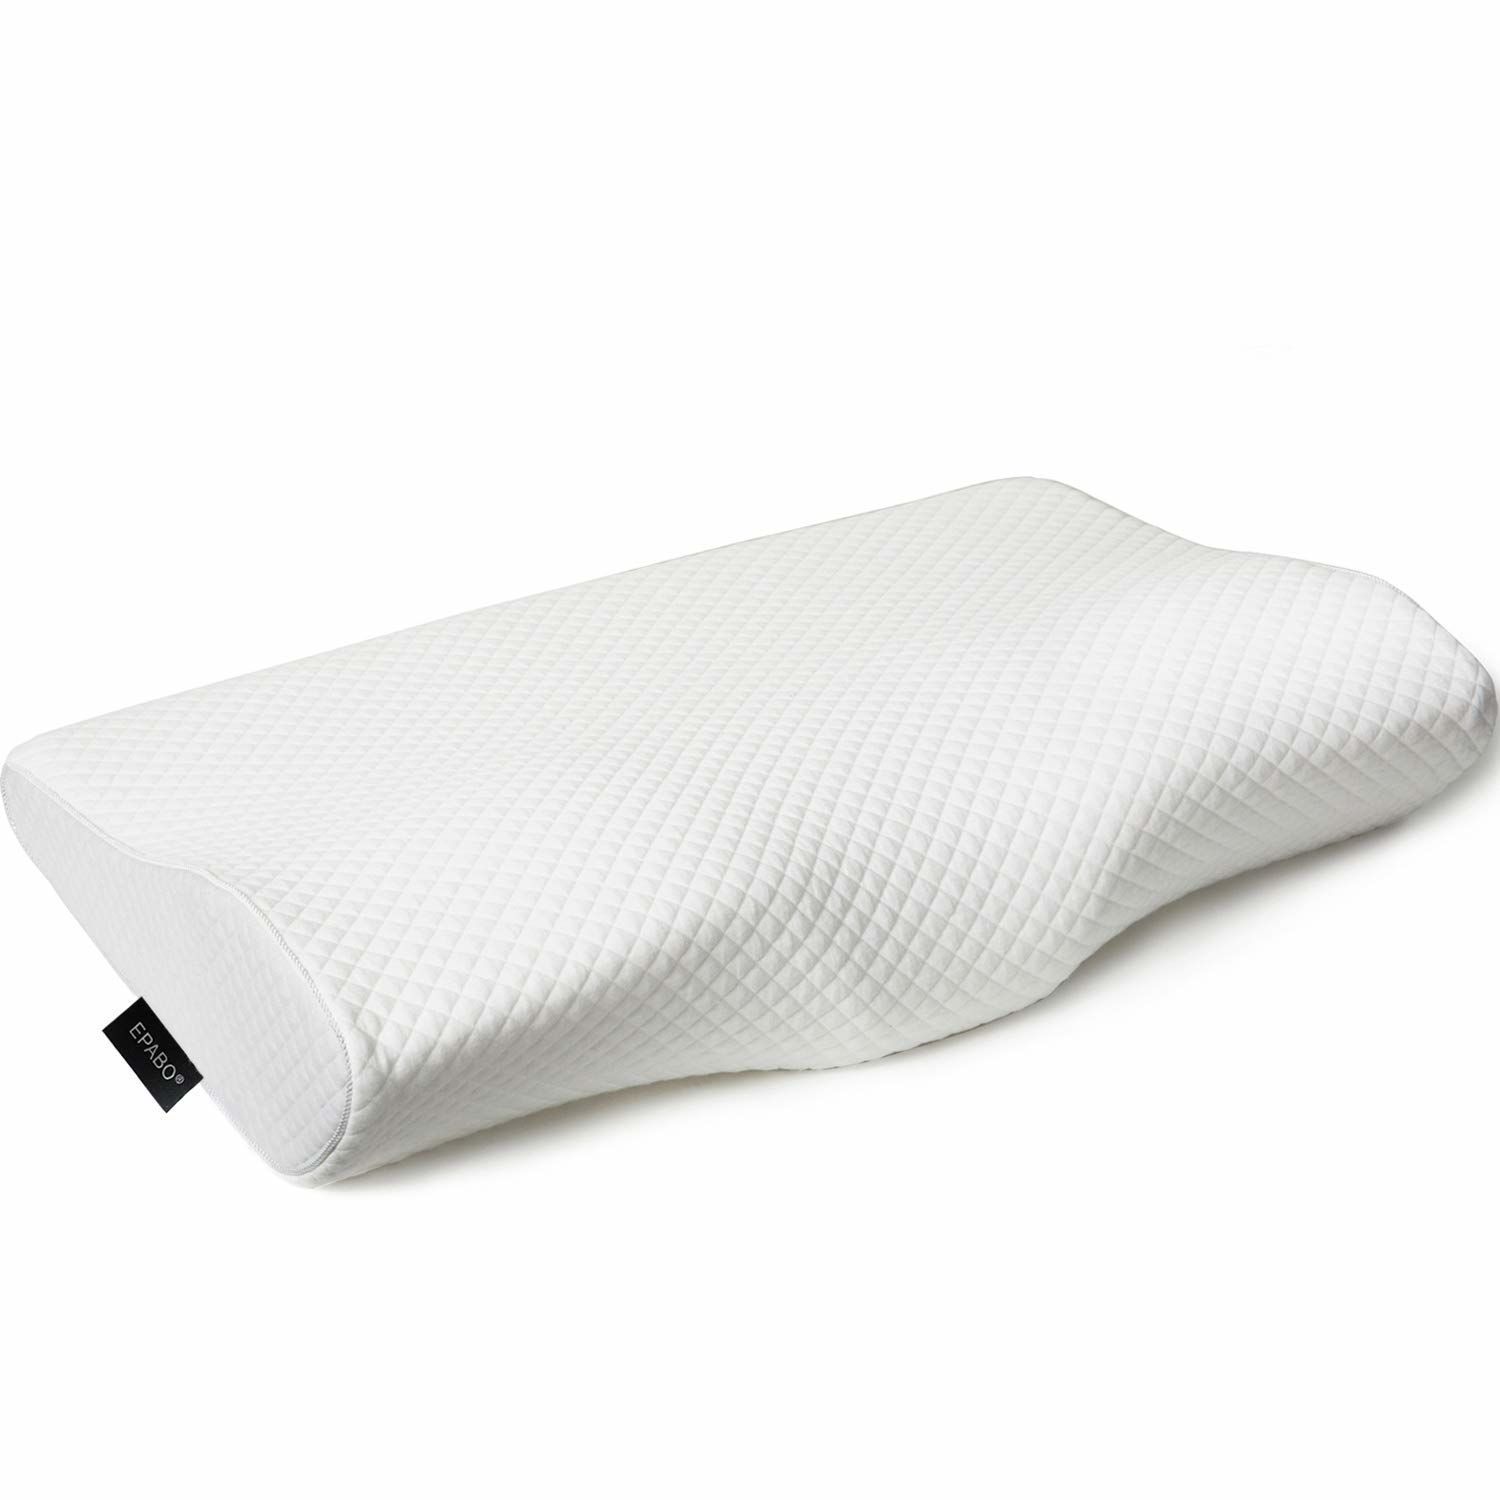 Top 9 Best Pillow for Arthritis in Neck 2021